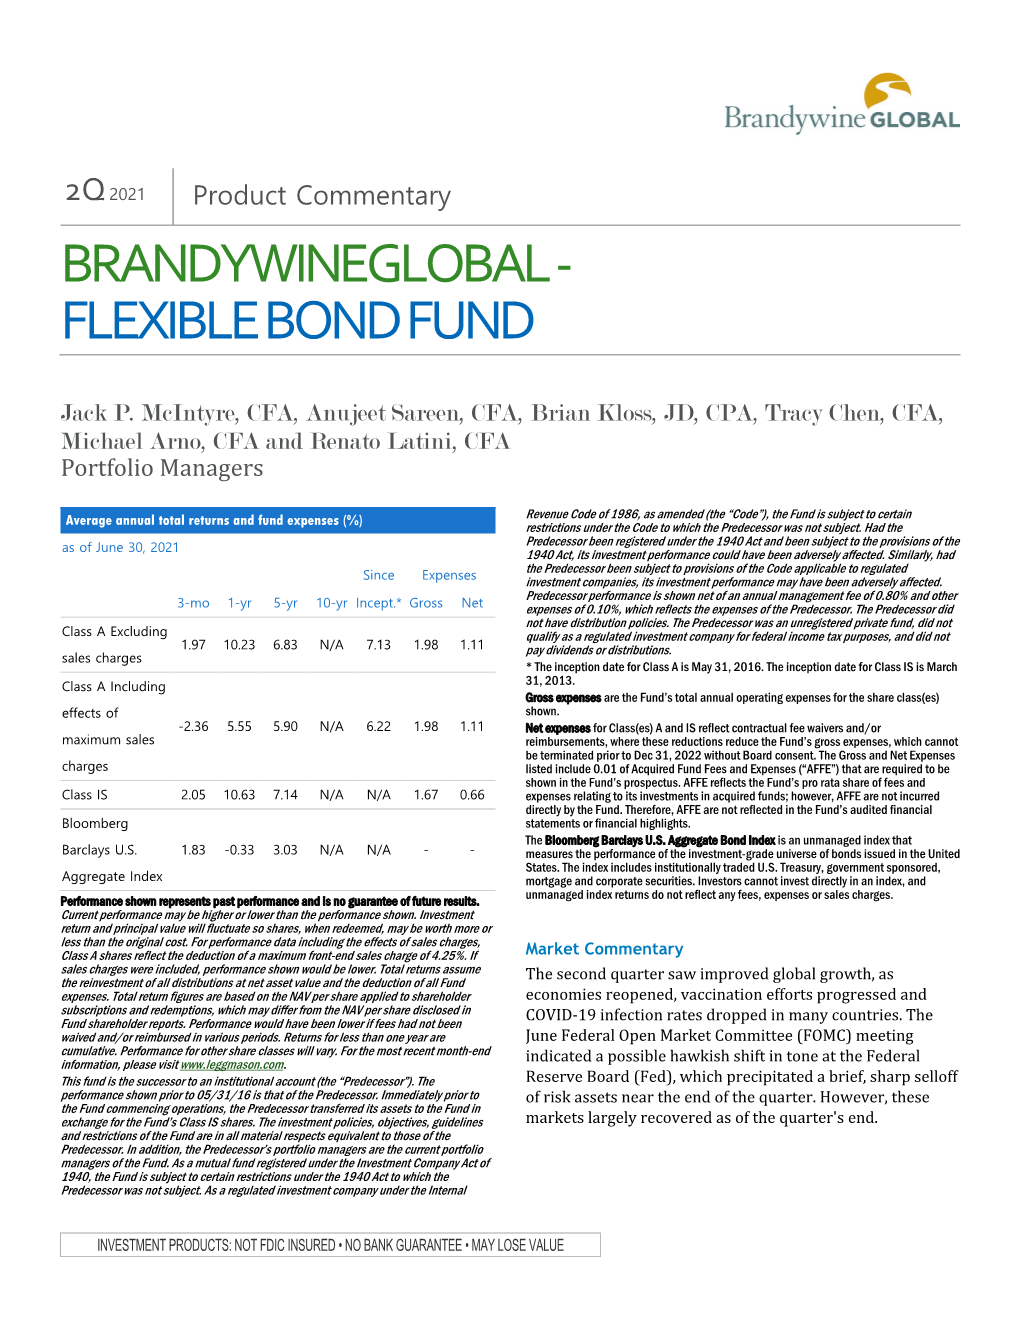 Brandywineglobal- Flexible Bond Fund